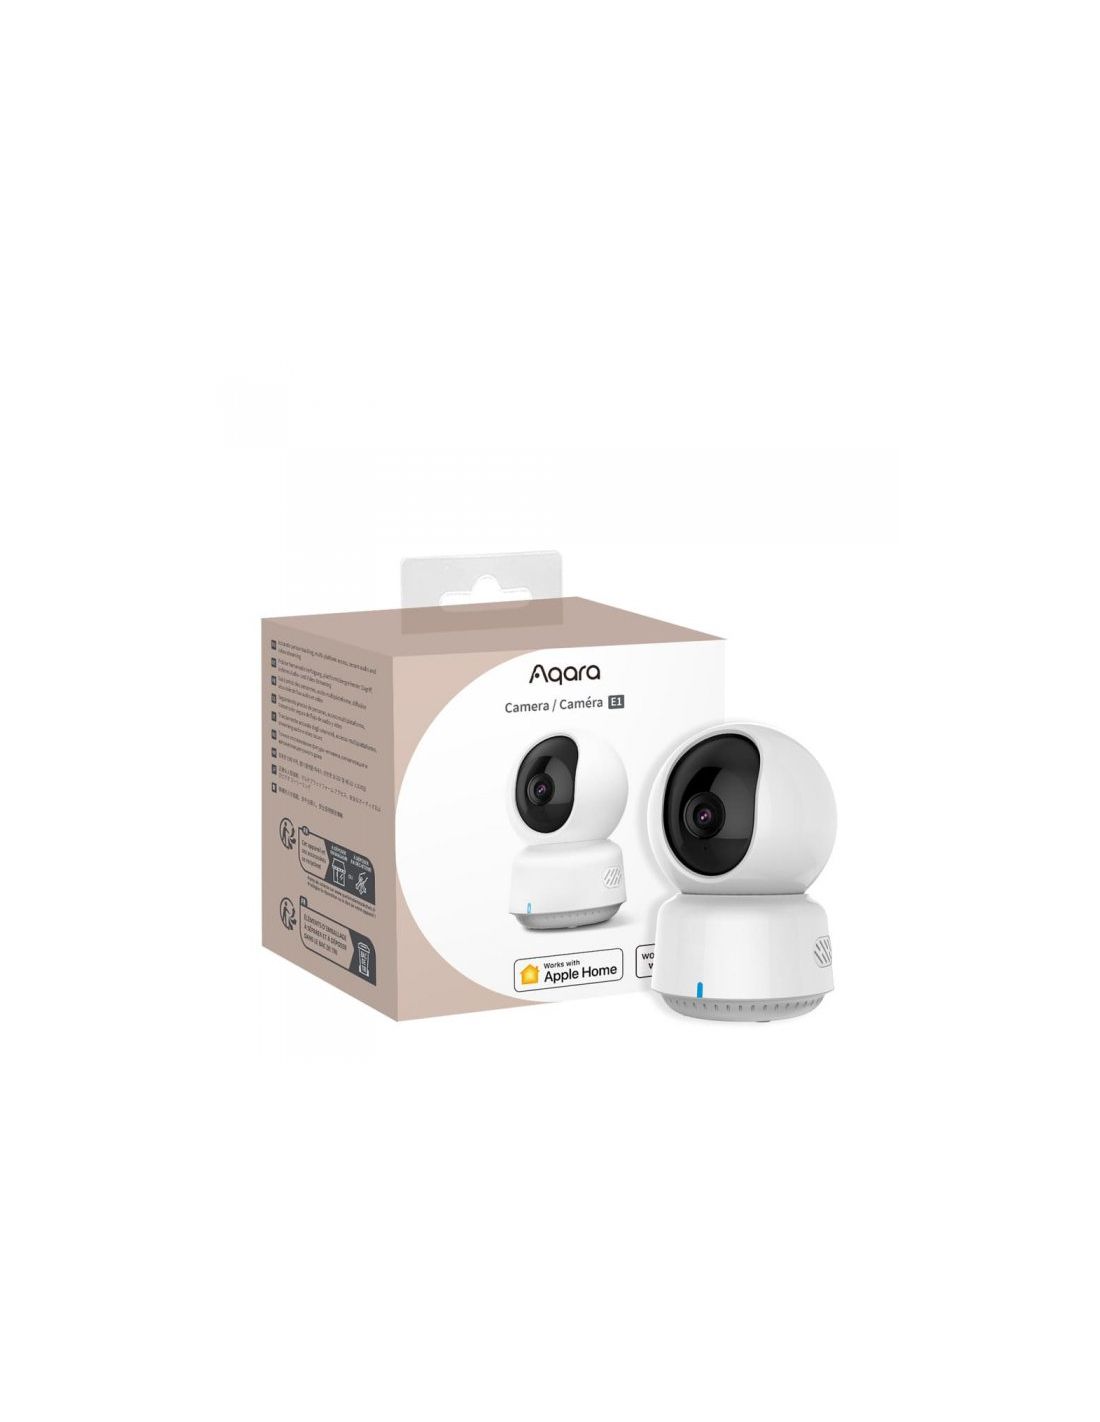 AI-Enabled Smart Home Cameras : Aqara Camera Hub G3